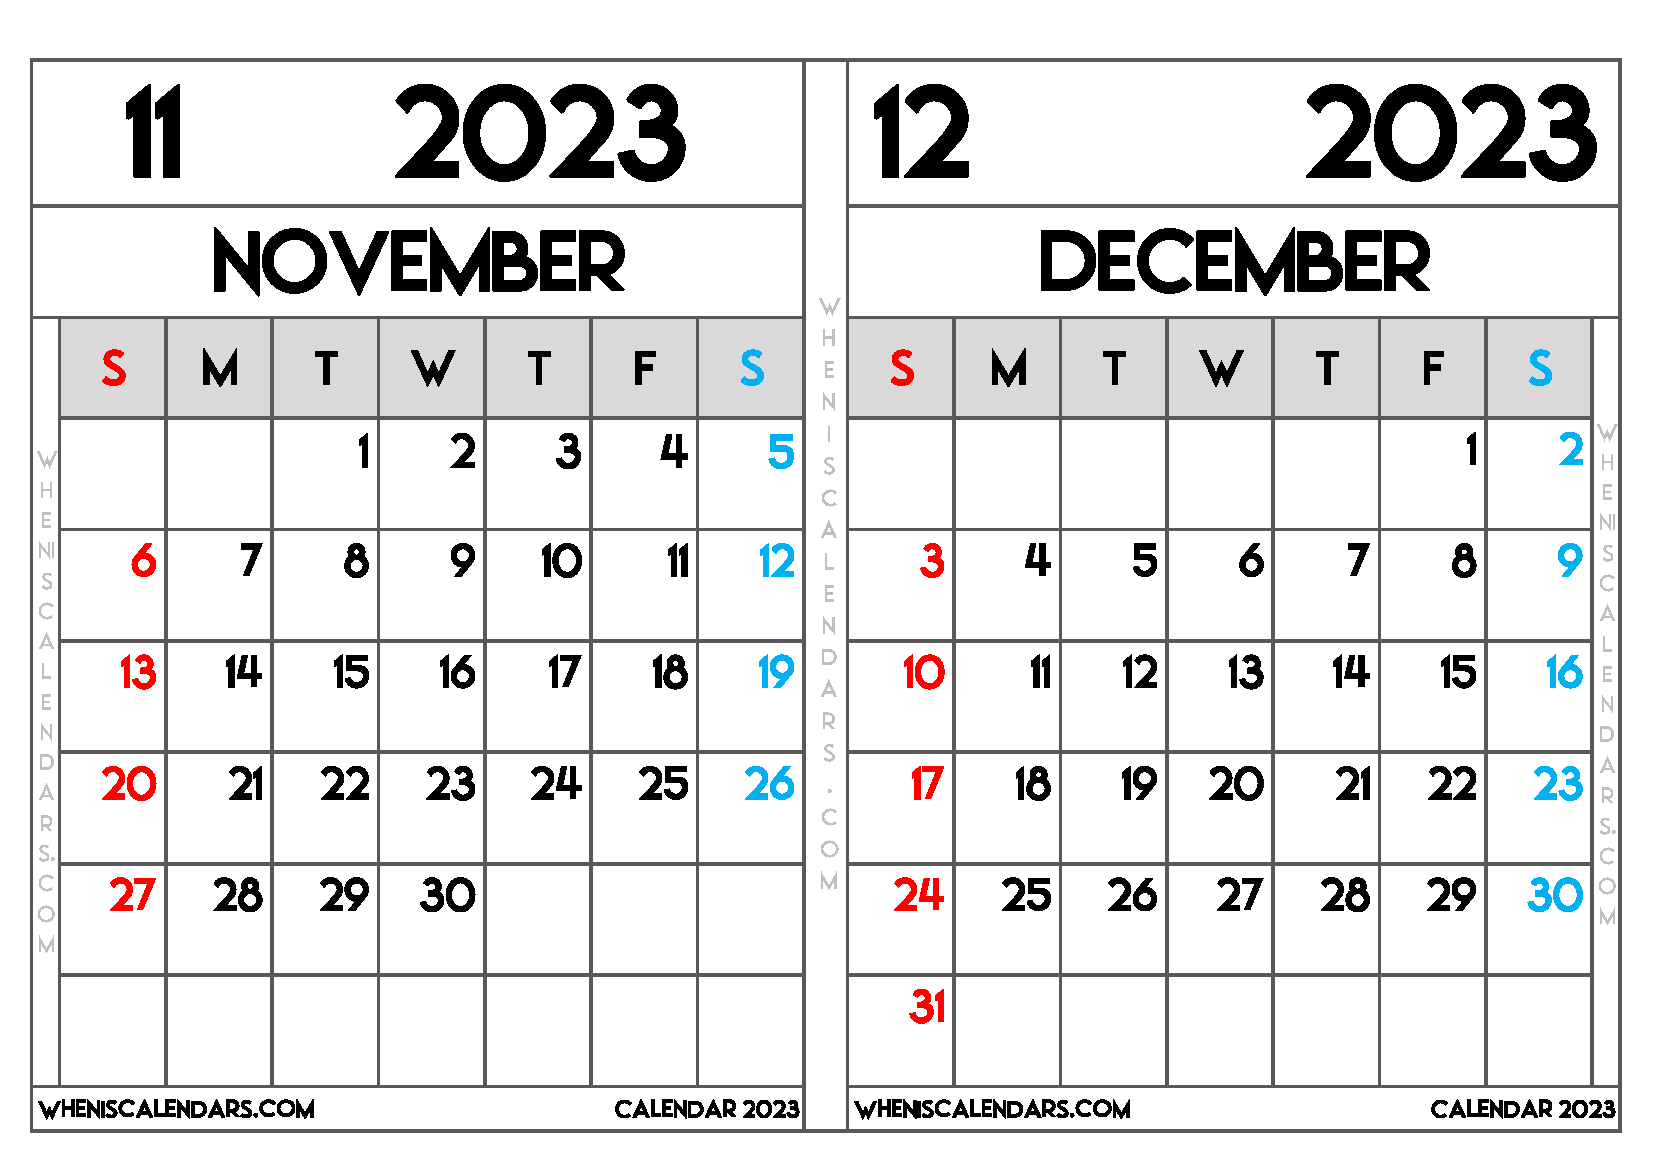 Download Free Printable November December 2023 Calendar as PDF and PNG Image